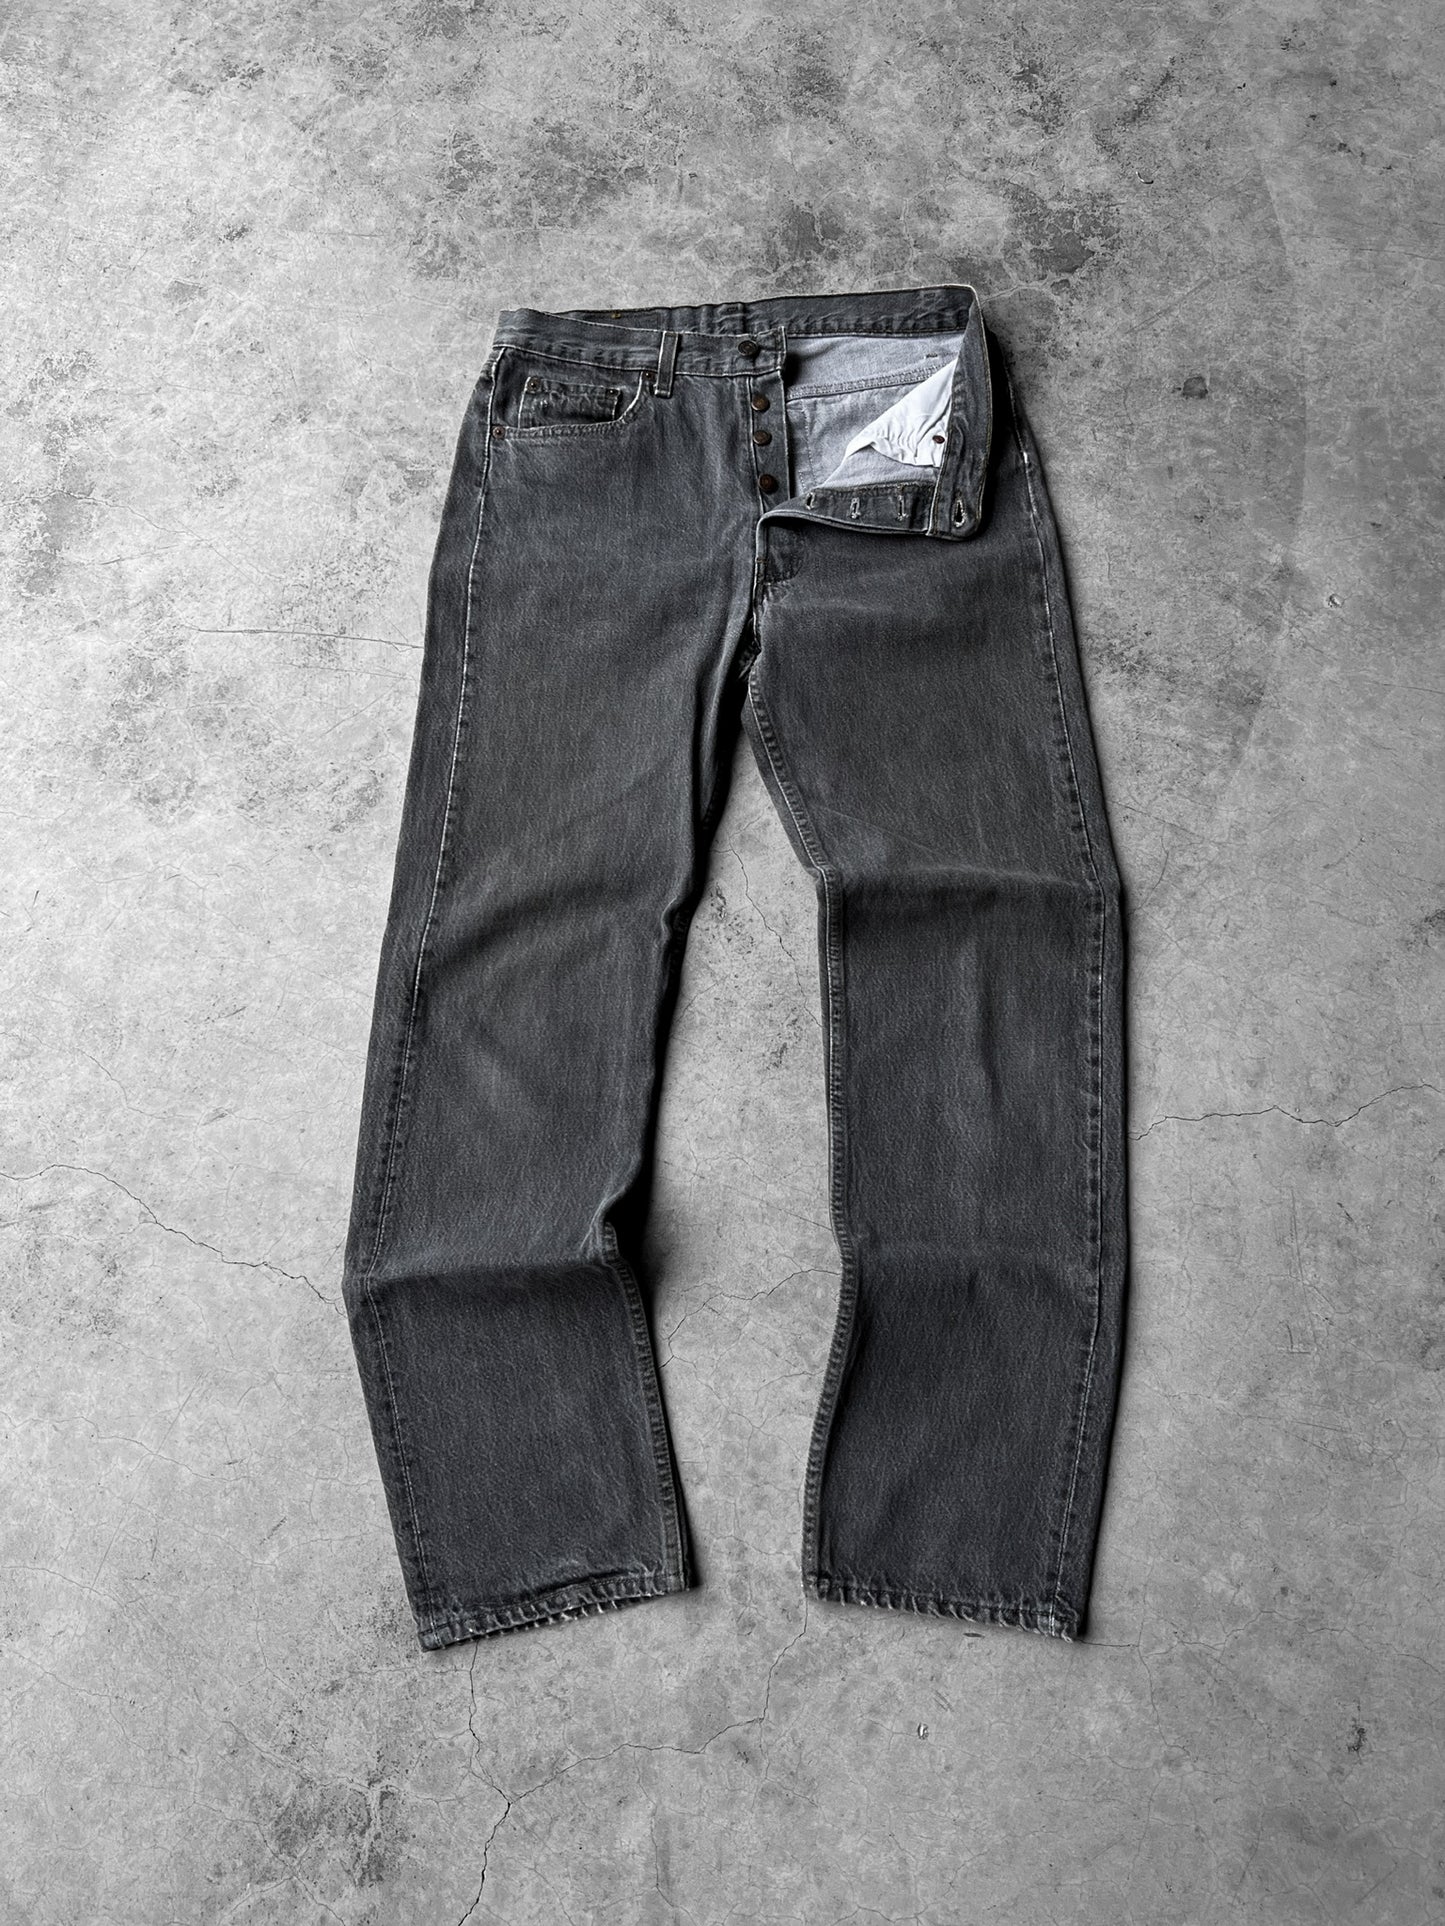 Levi's 501 Faded Jeans Black - 33 x 34